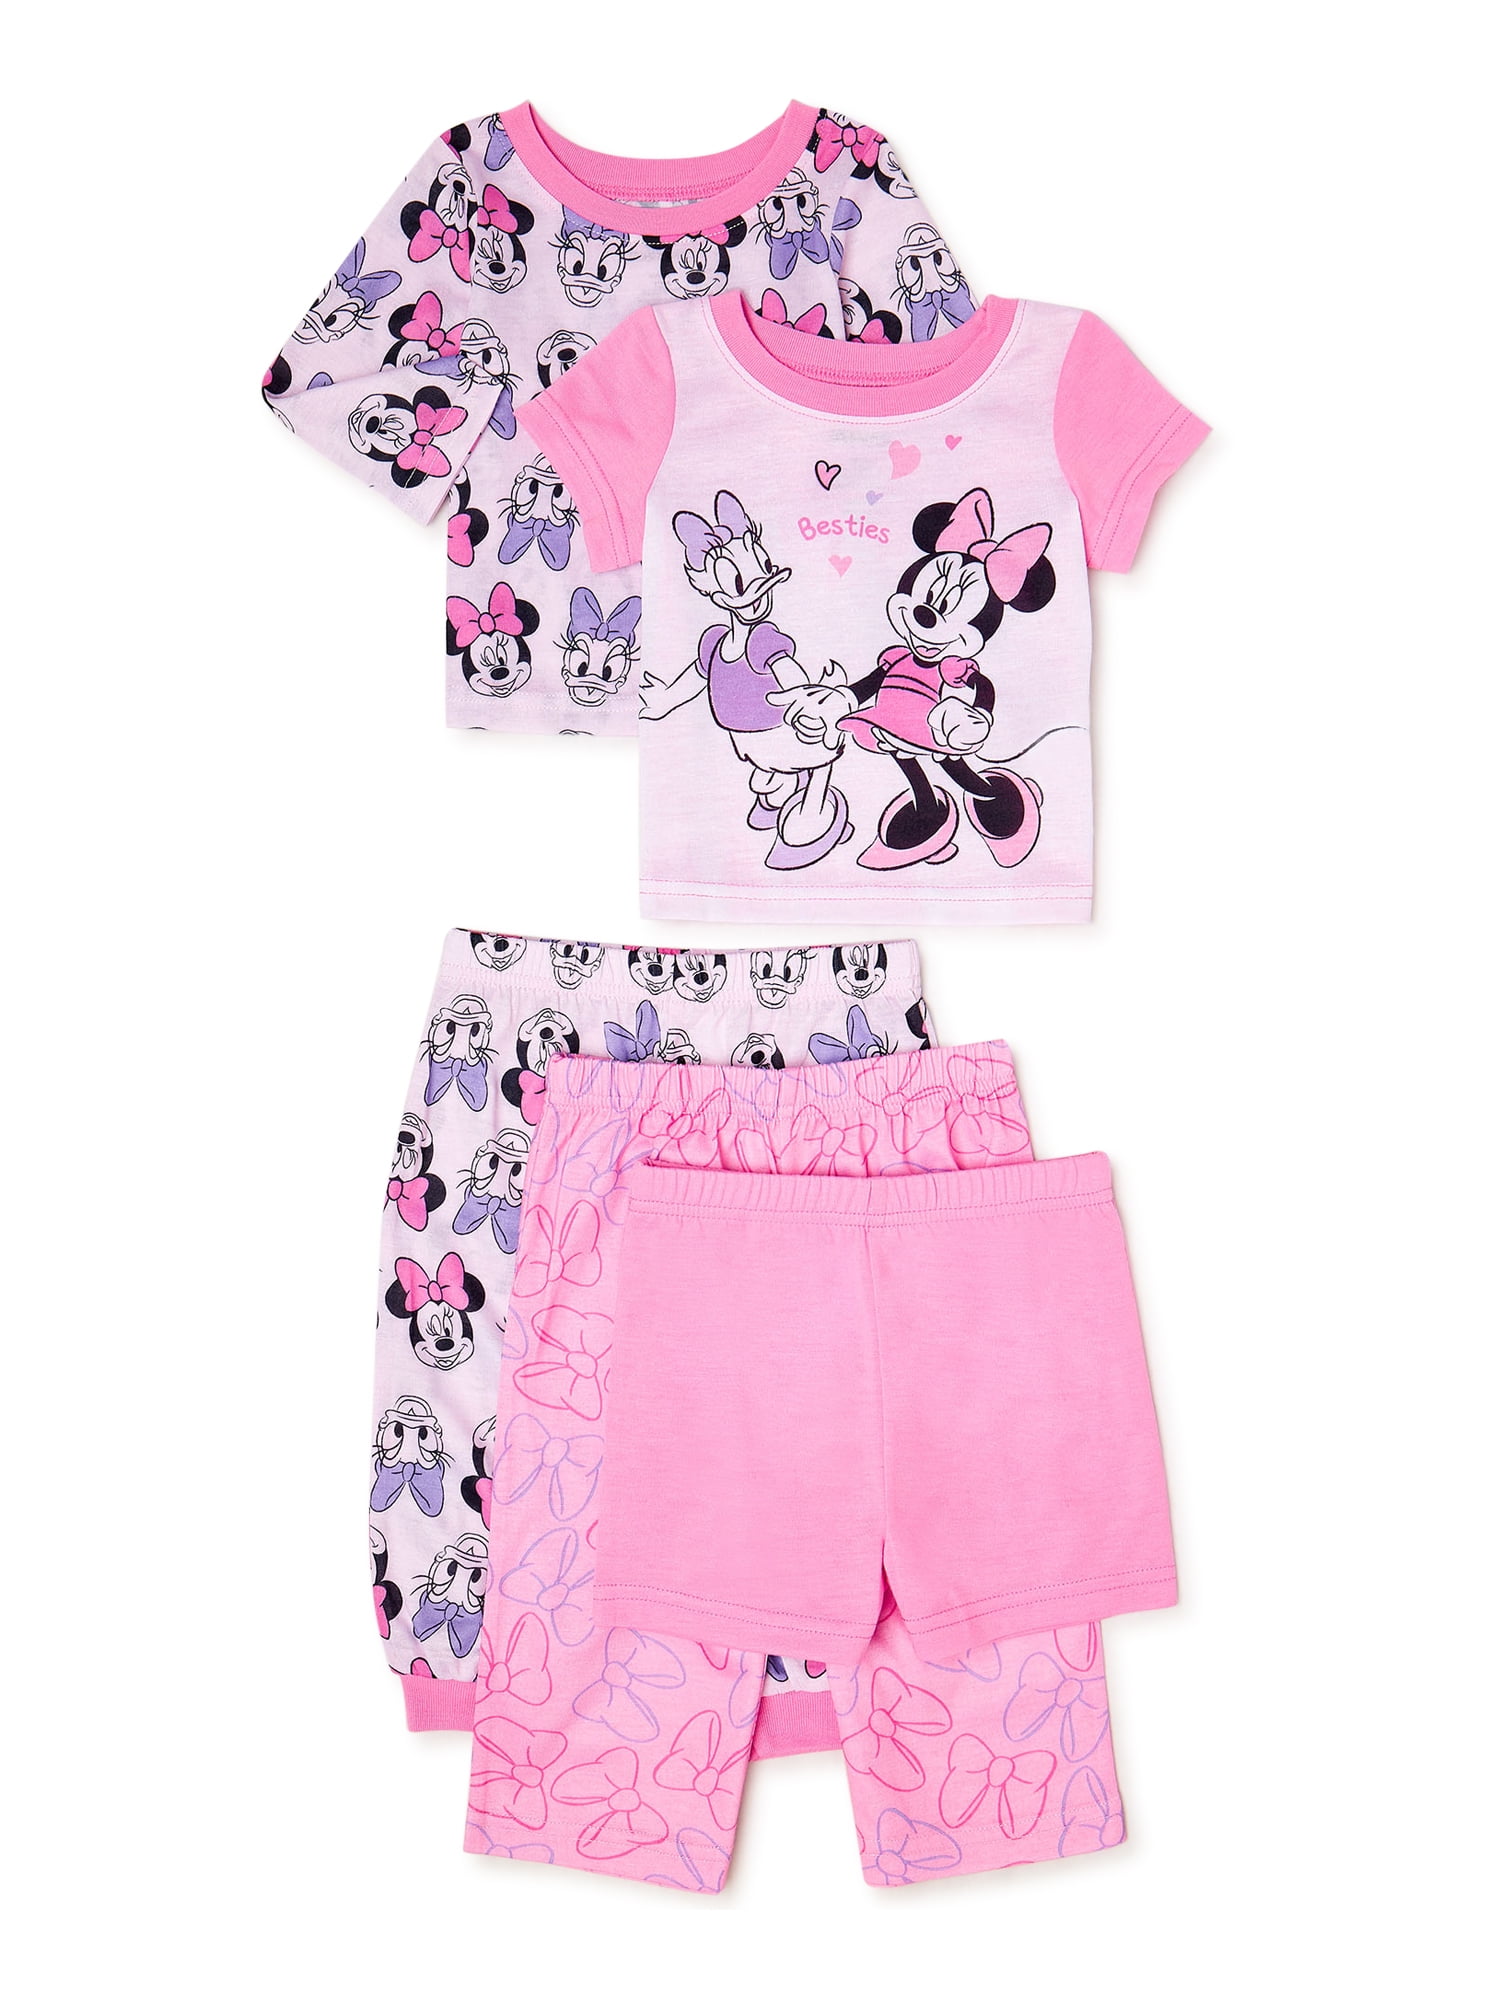 Girls DIsney Minnie Mouse Short Pyjamas Kids Shortie Pjs 2 Piece Nightwear Set 